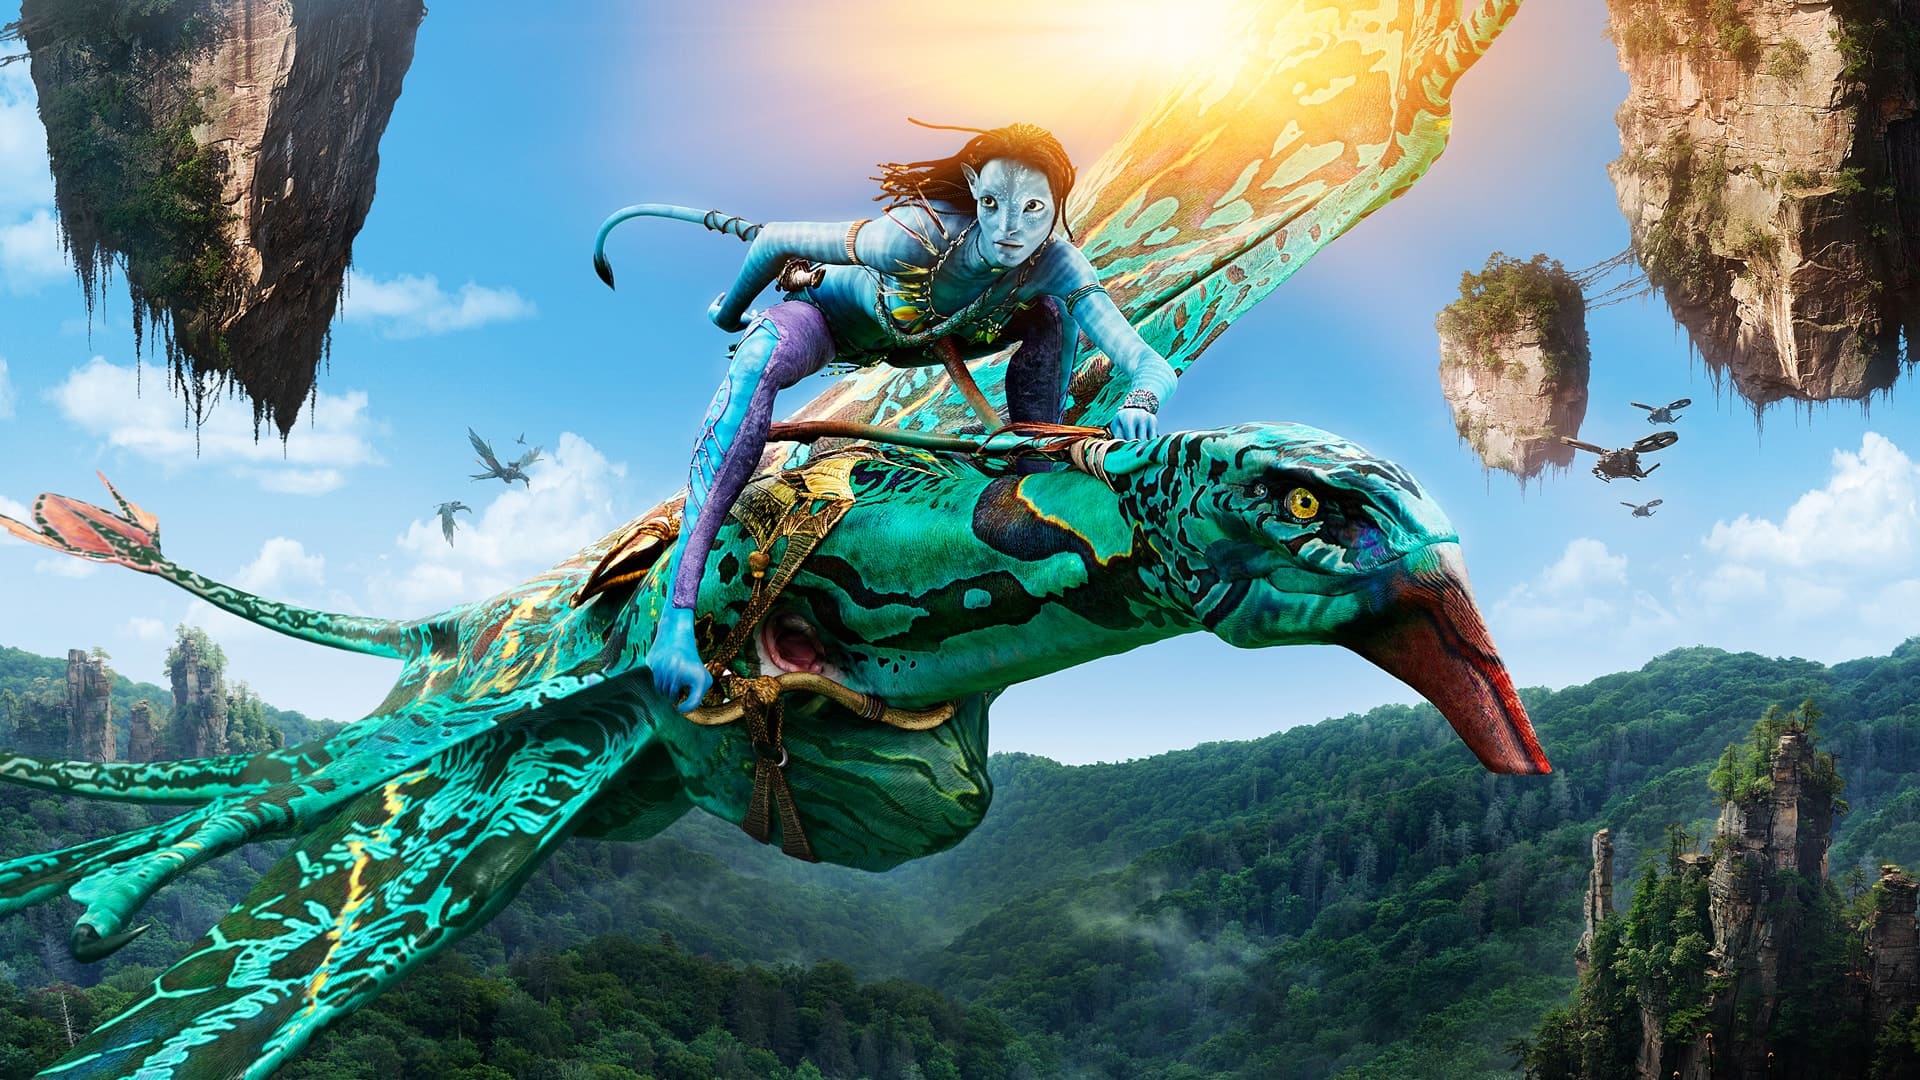 Avatar Frontiers of Pandora Wallpaper Best Avatar Background Download [ 35 + HD ]